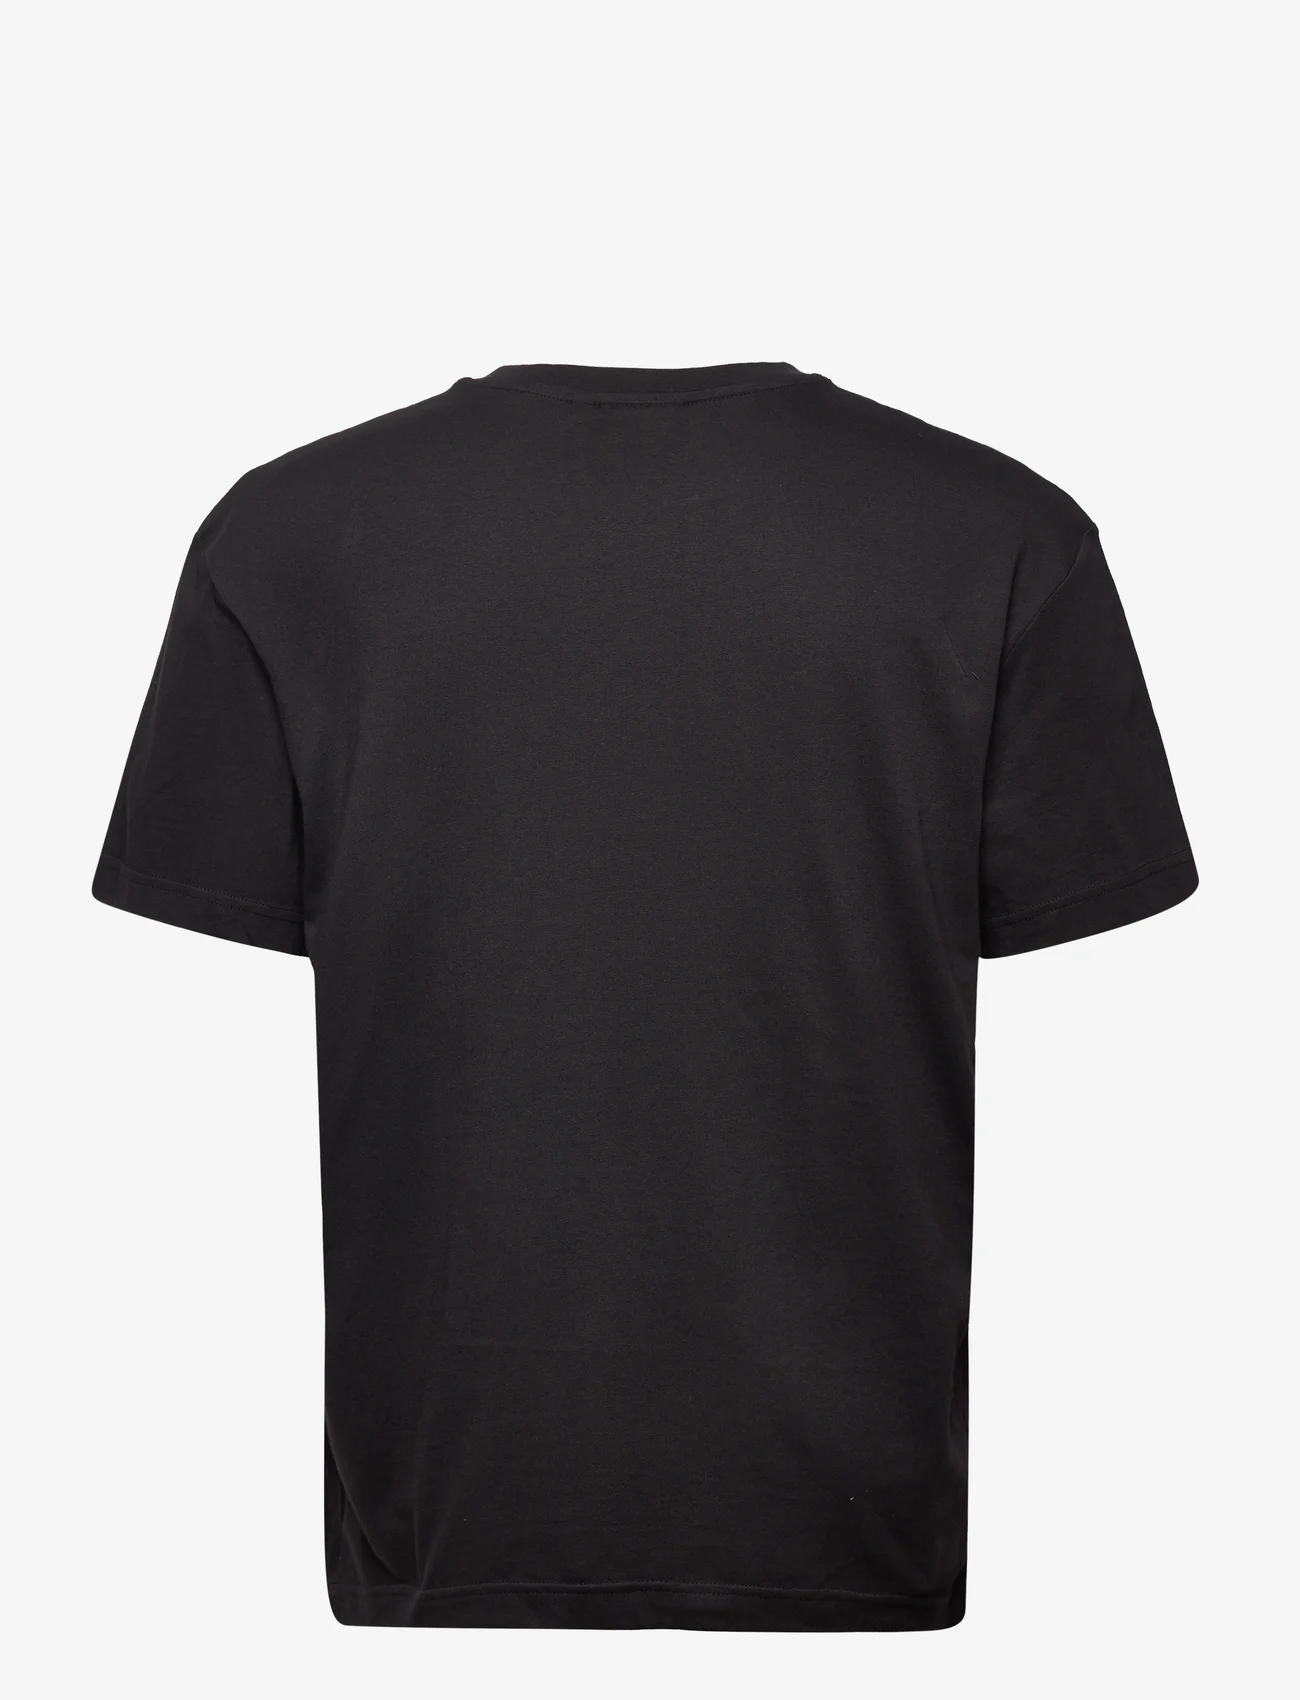 Calvin Klein - COTTON COMFORT FIT T-SHIRT - basic t-shirts - ck black - 1